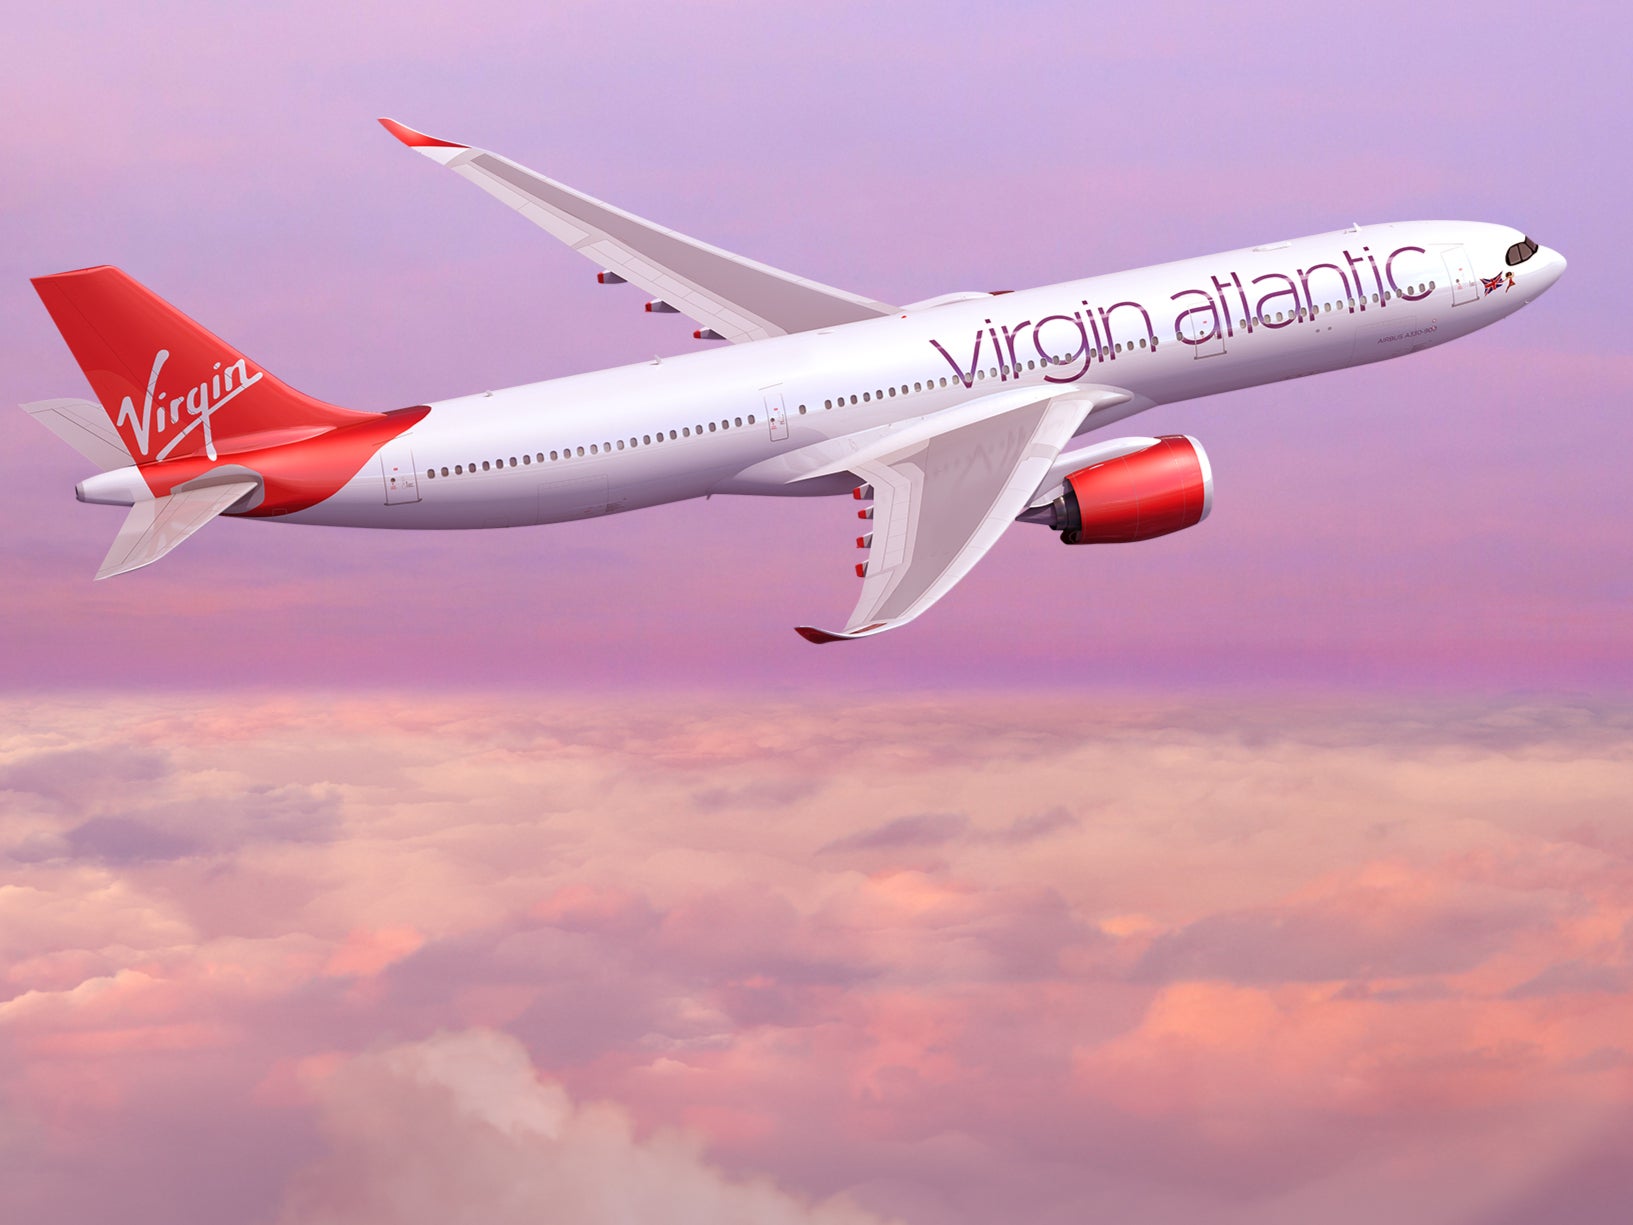 Flying high: Virgin Atlantic Airbus A330neo